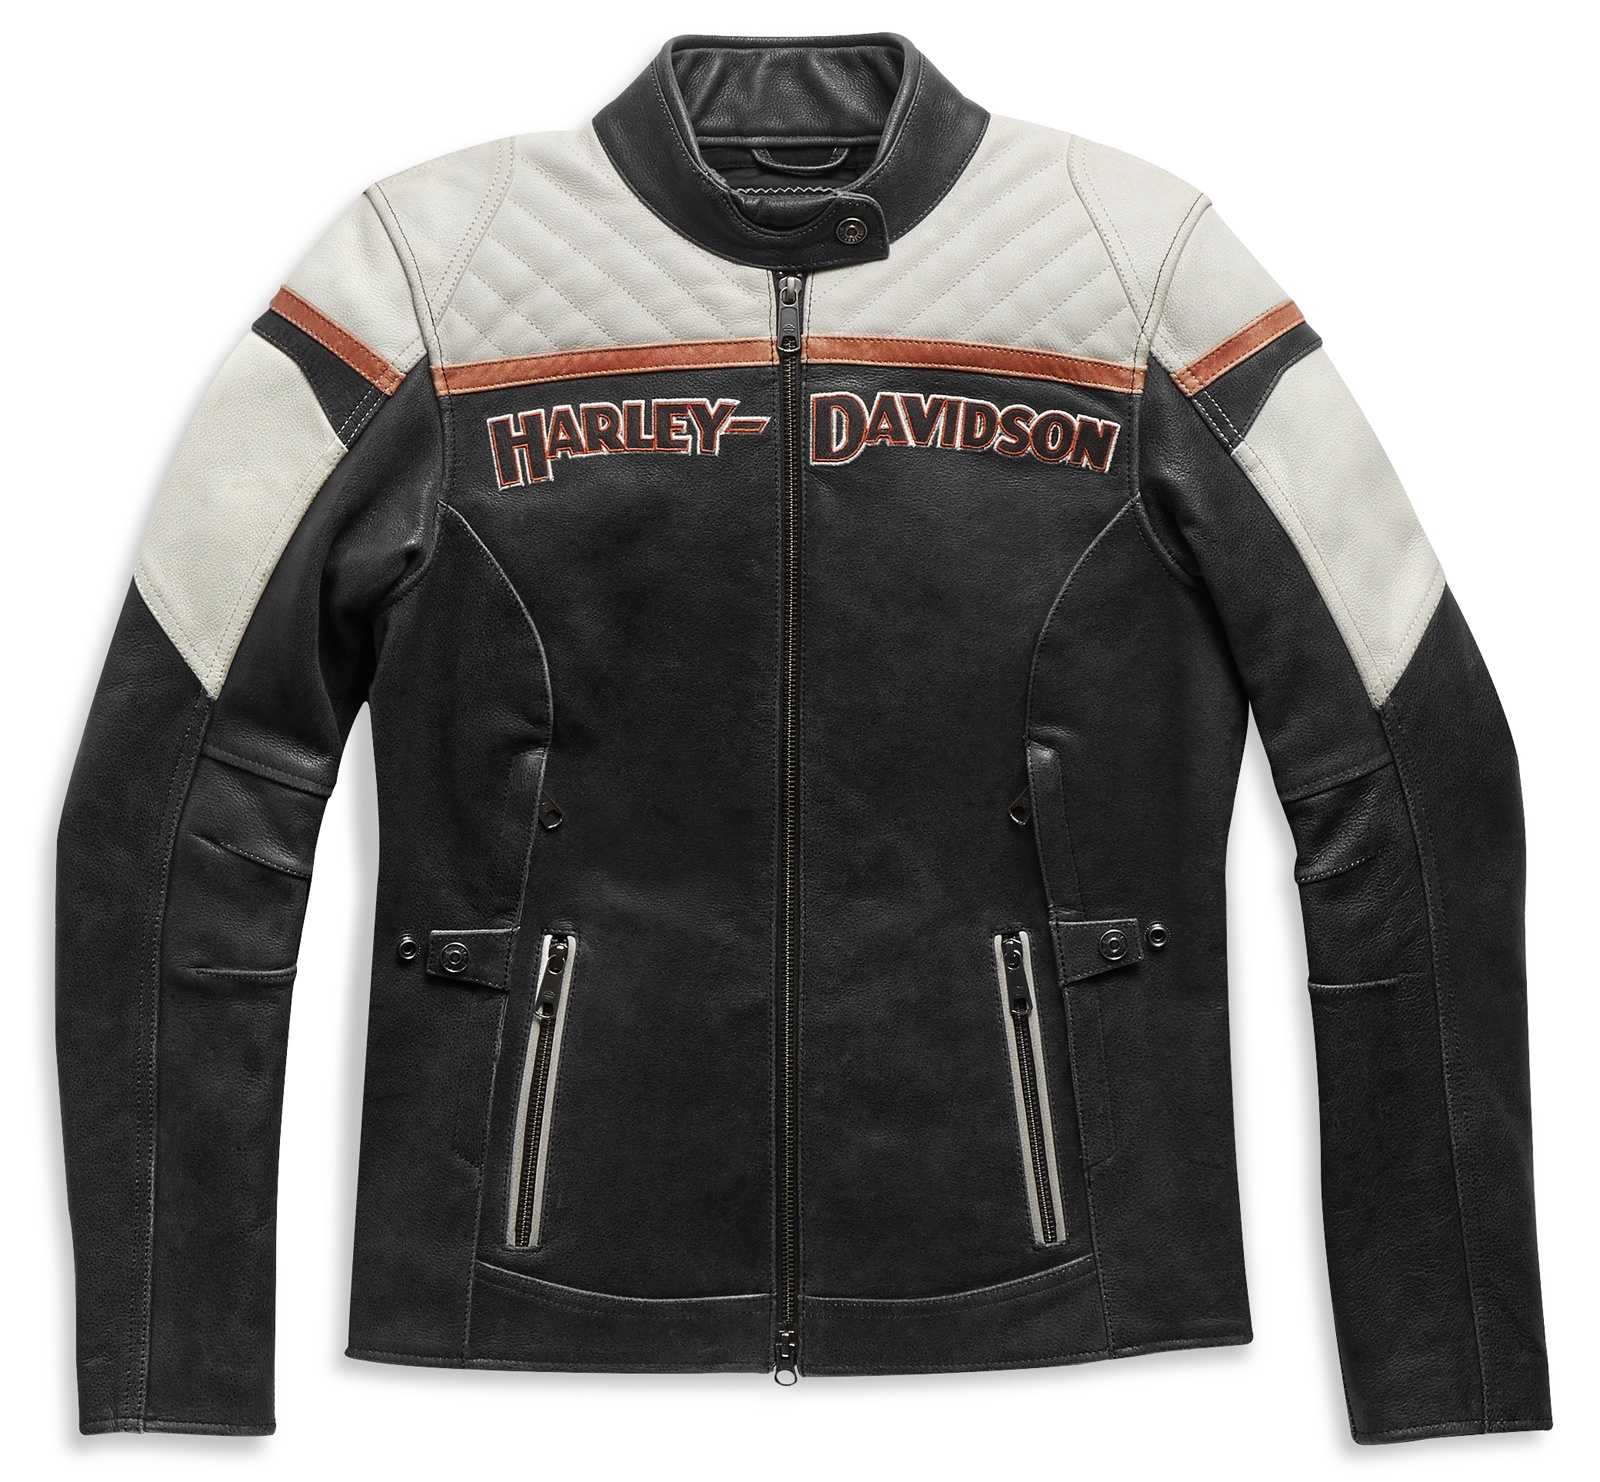 98008 21ew Harley Davidson Women S Leather Jacket Triple Vent Black White At Thunderbike Shop